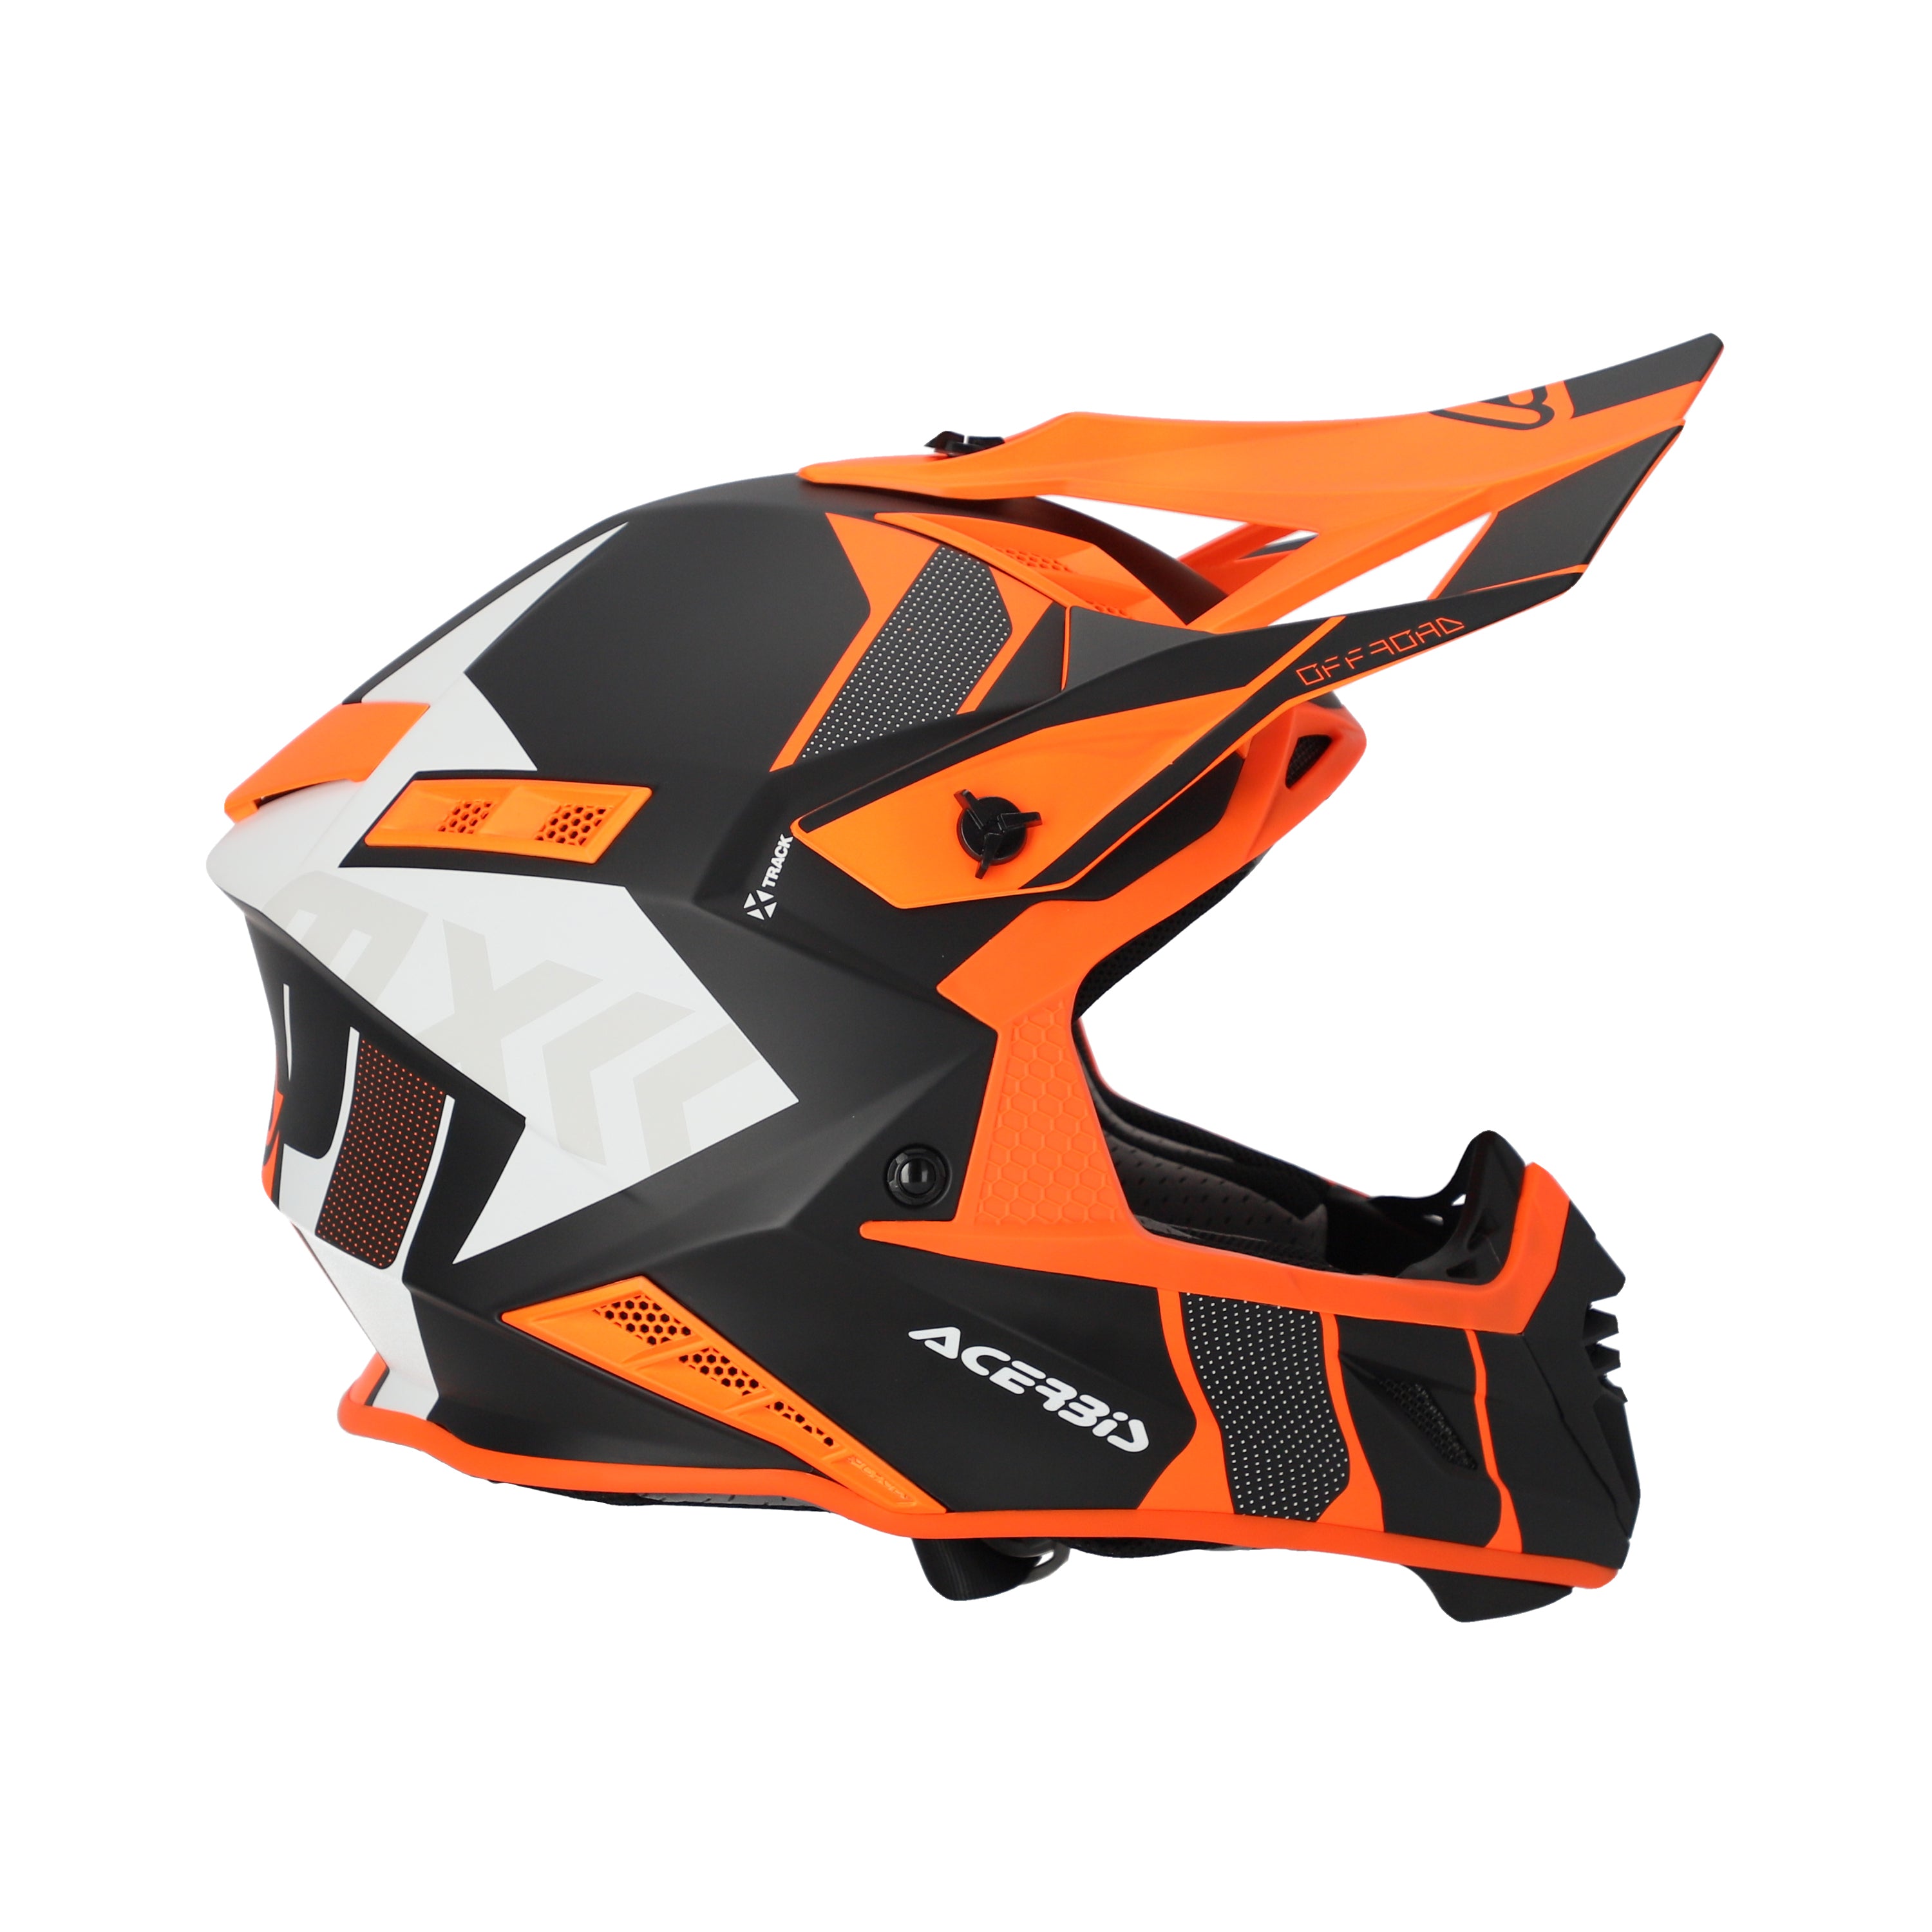 Acerbis X-Track MX Helmet Matte Orange Fluo/Black